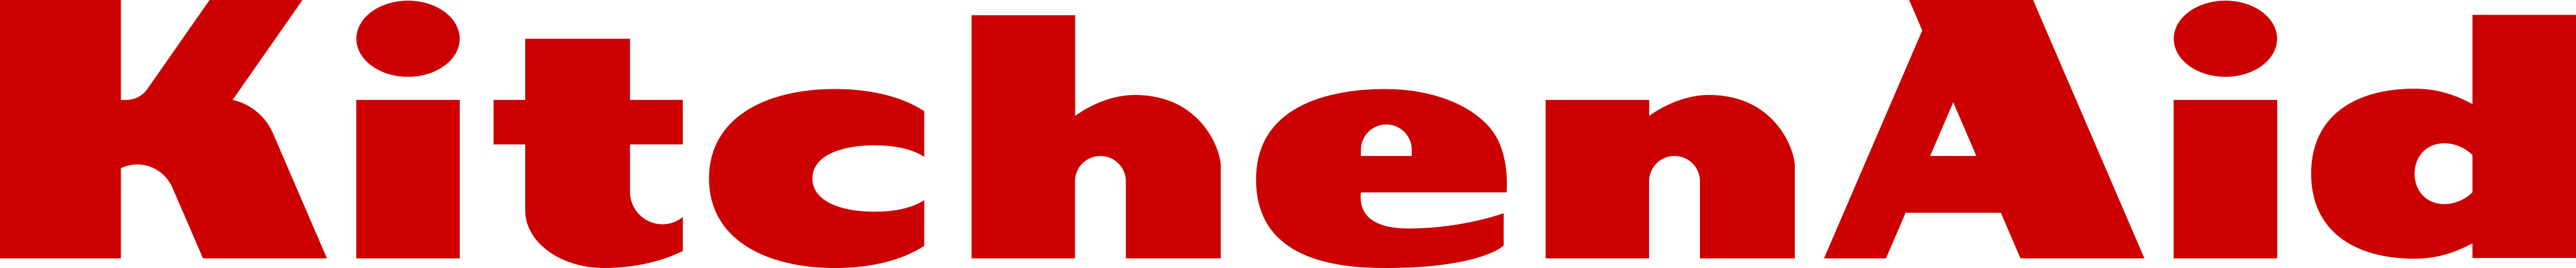 KitchenAid Logo.